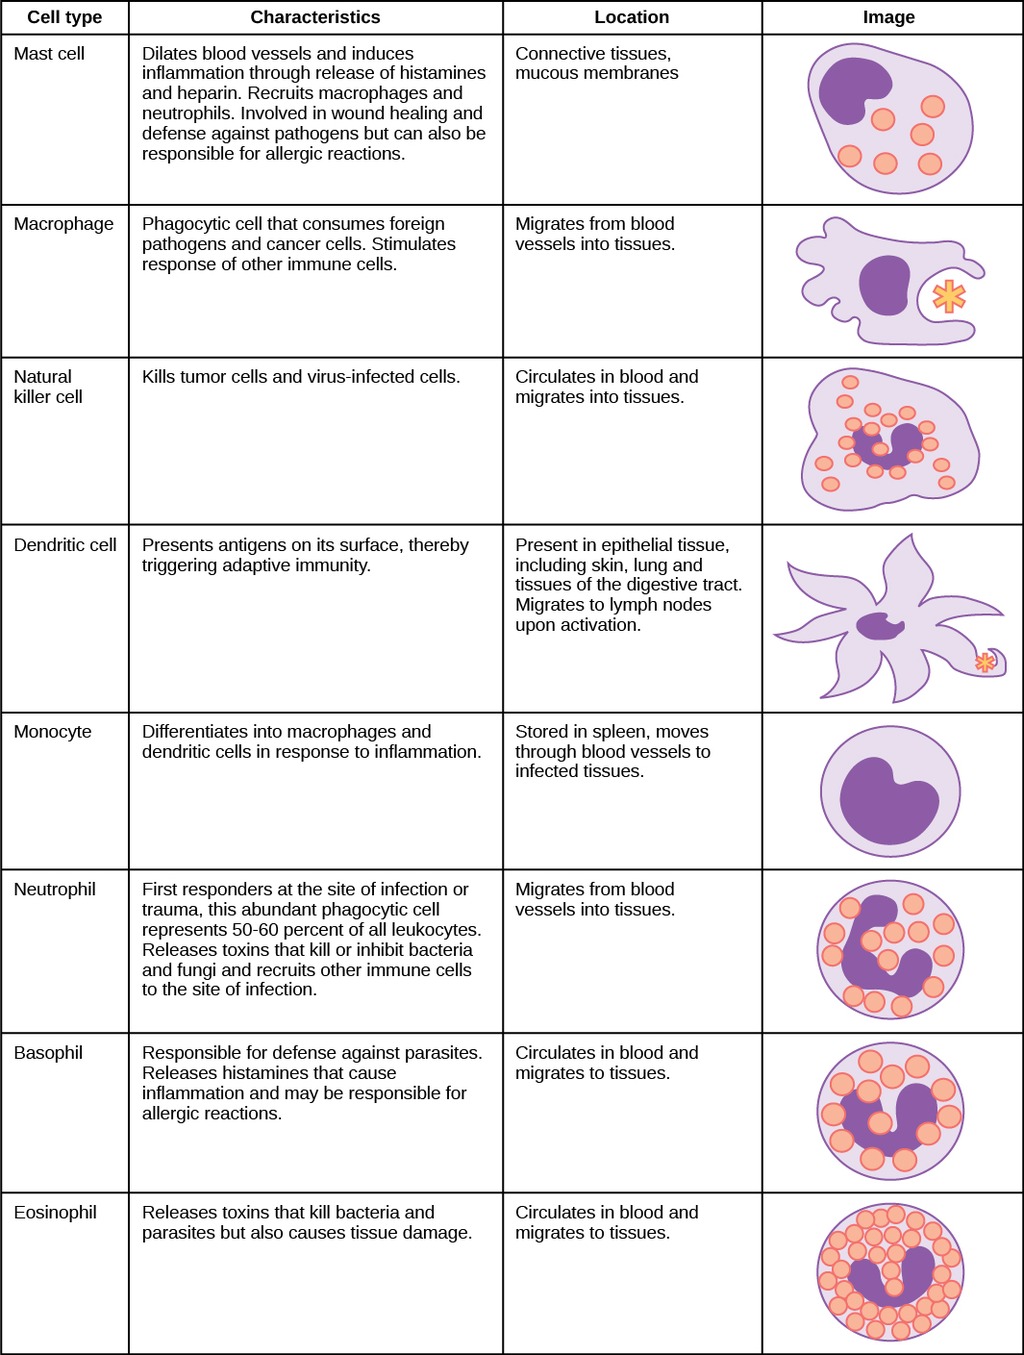 Cells involved in the innate immune system